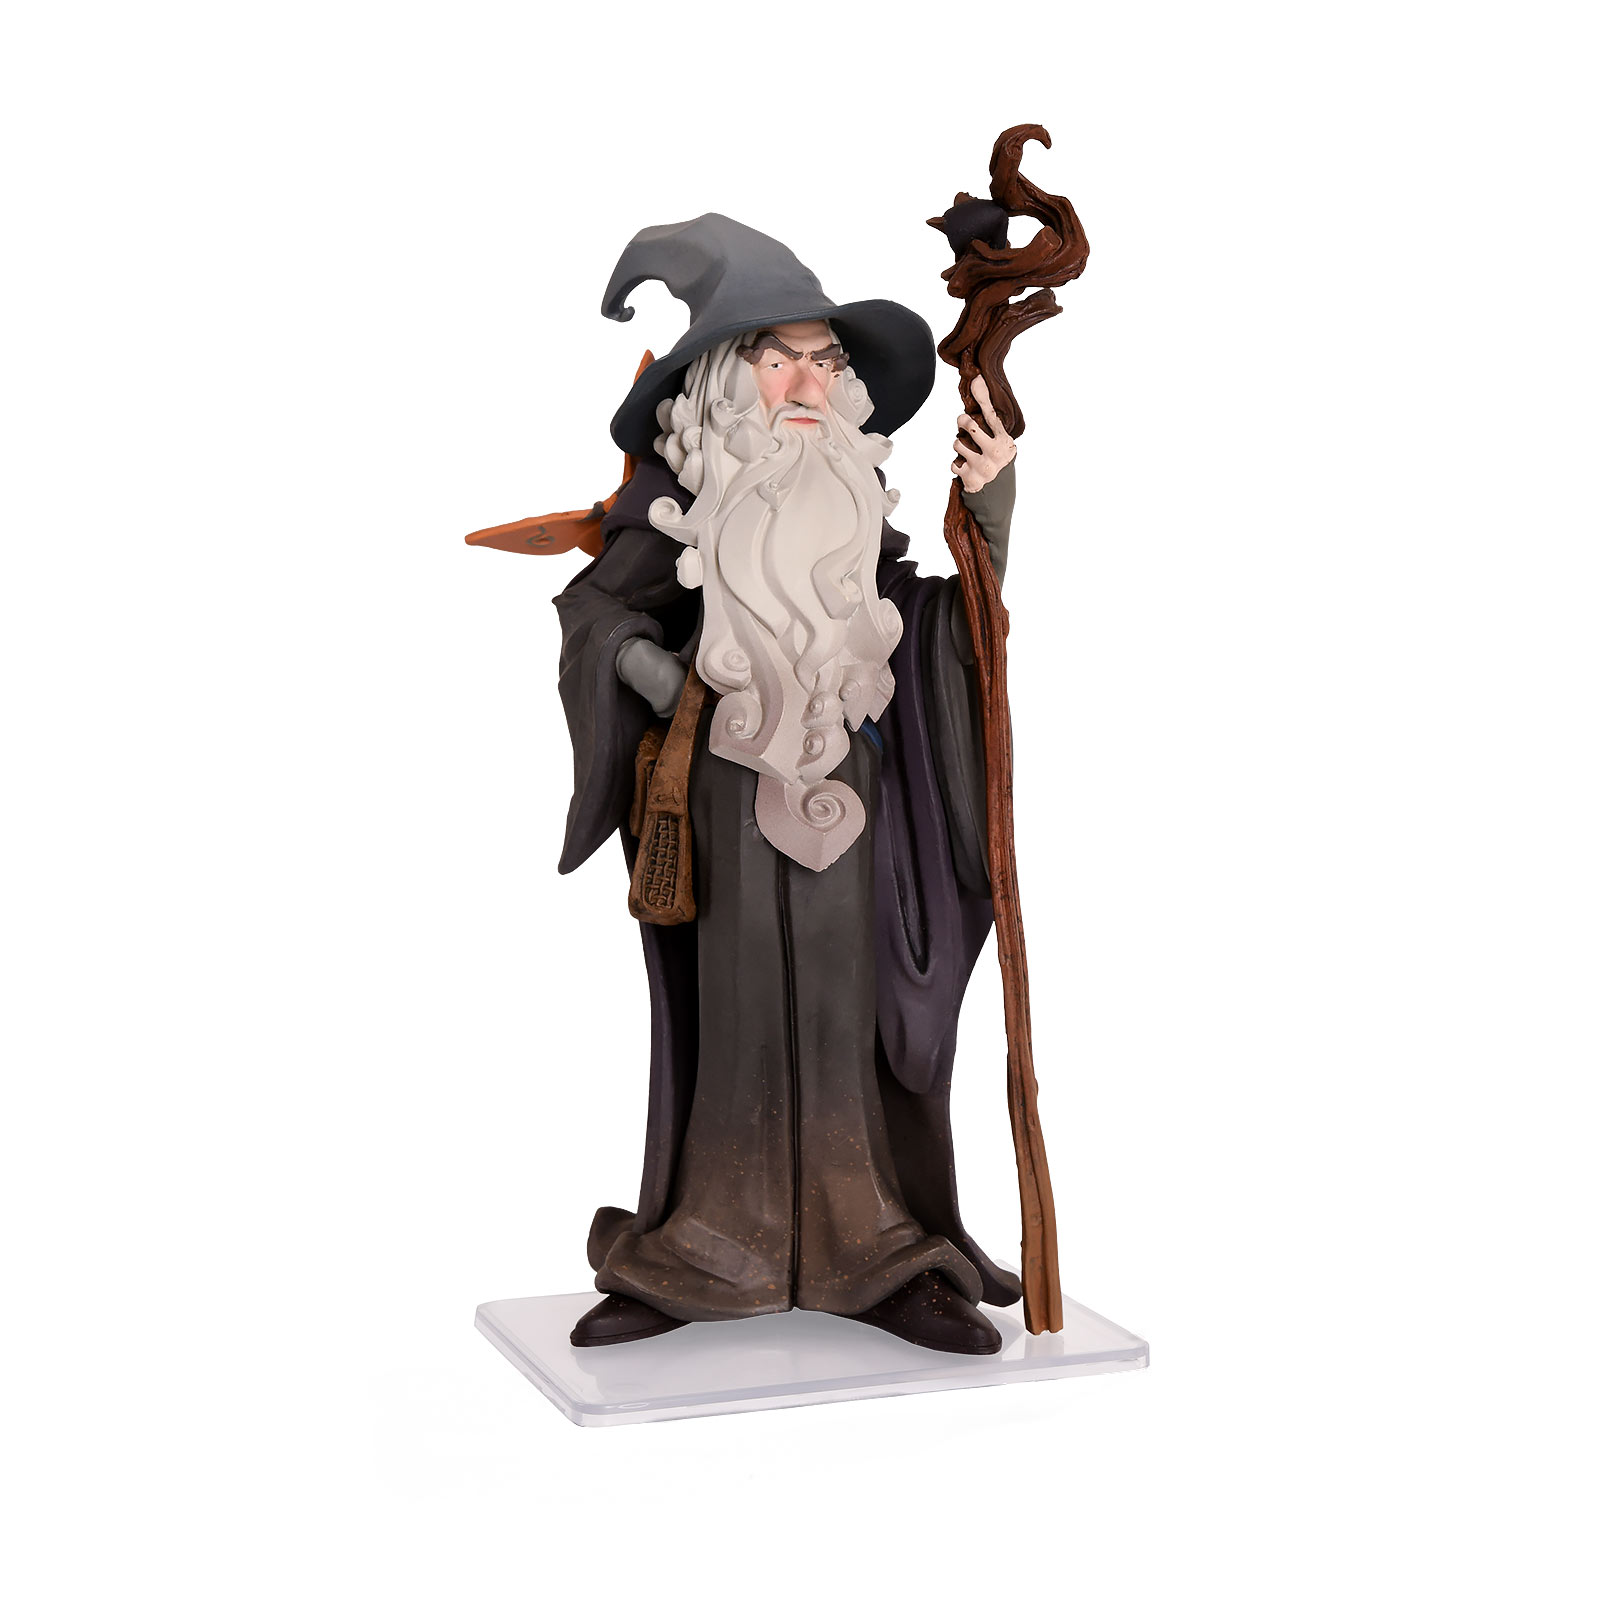 Herr der Ringe - Gandalf Mini Epics Figur